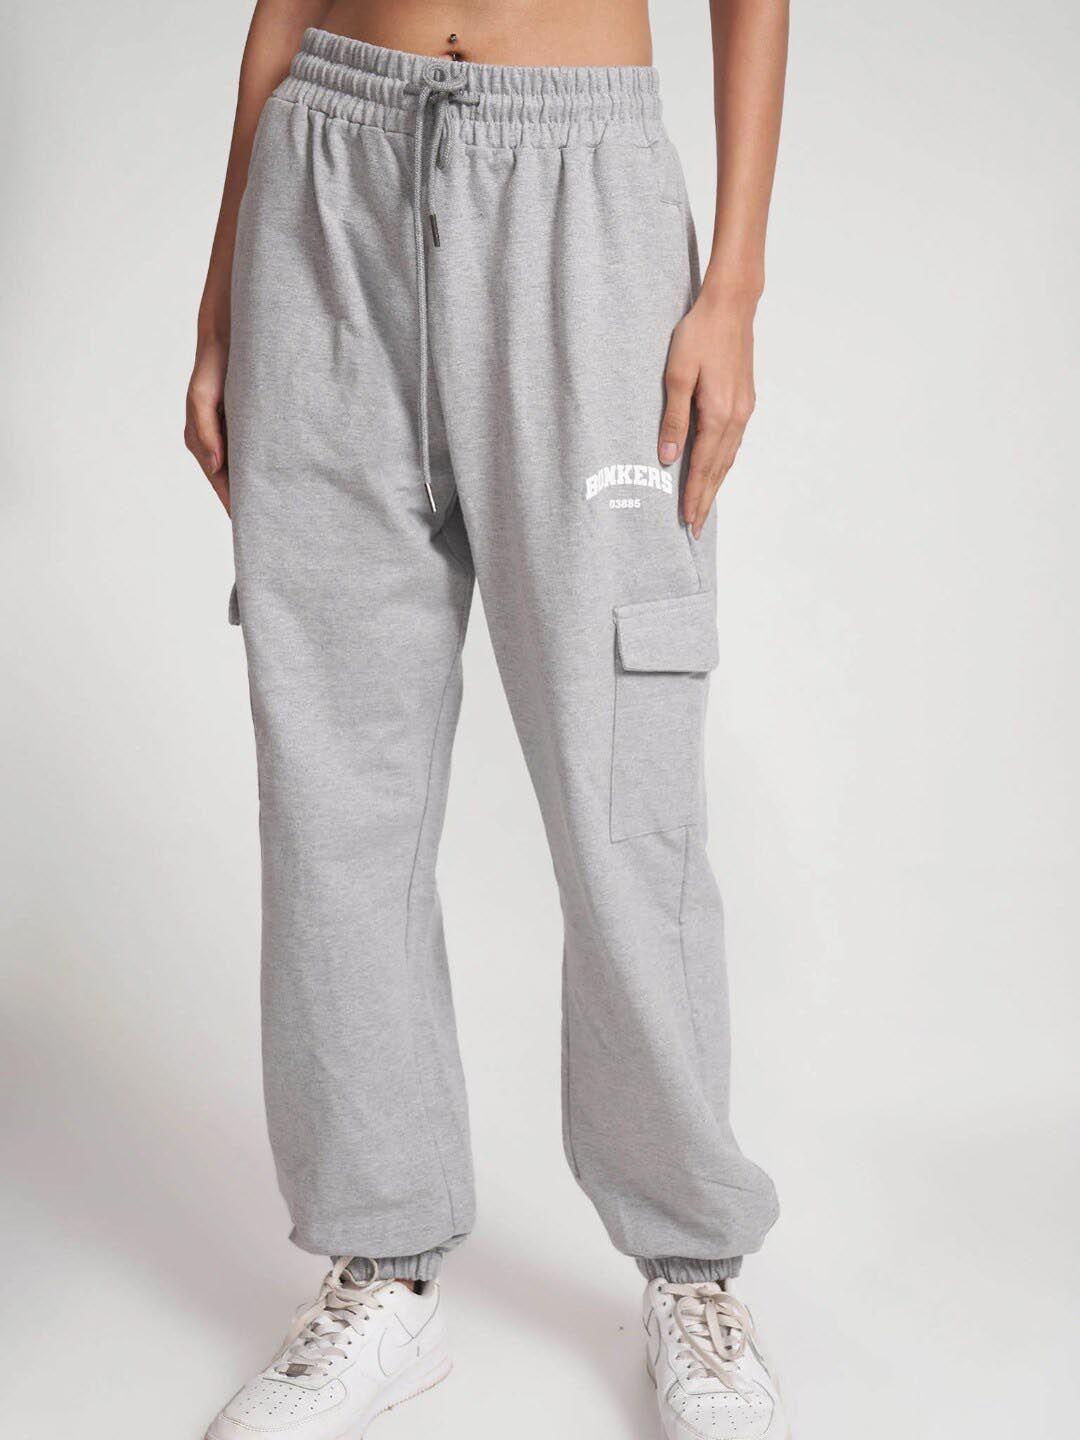 bonkers-corner-women-grey-relaxed-cotton-cargo-track-pants